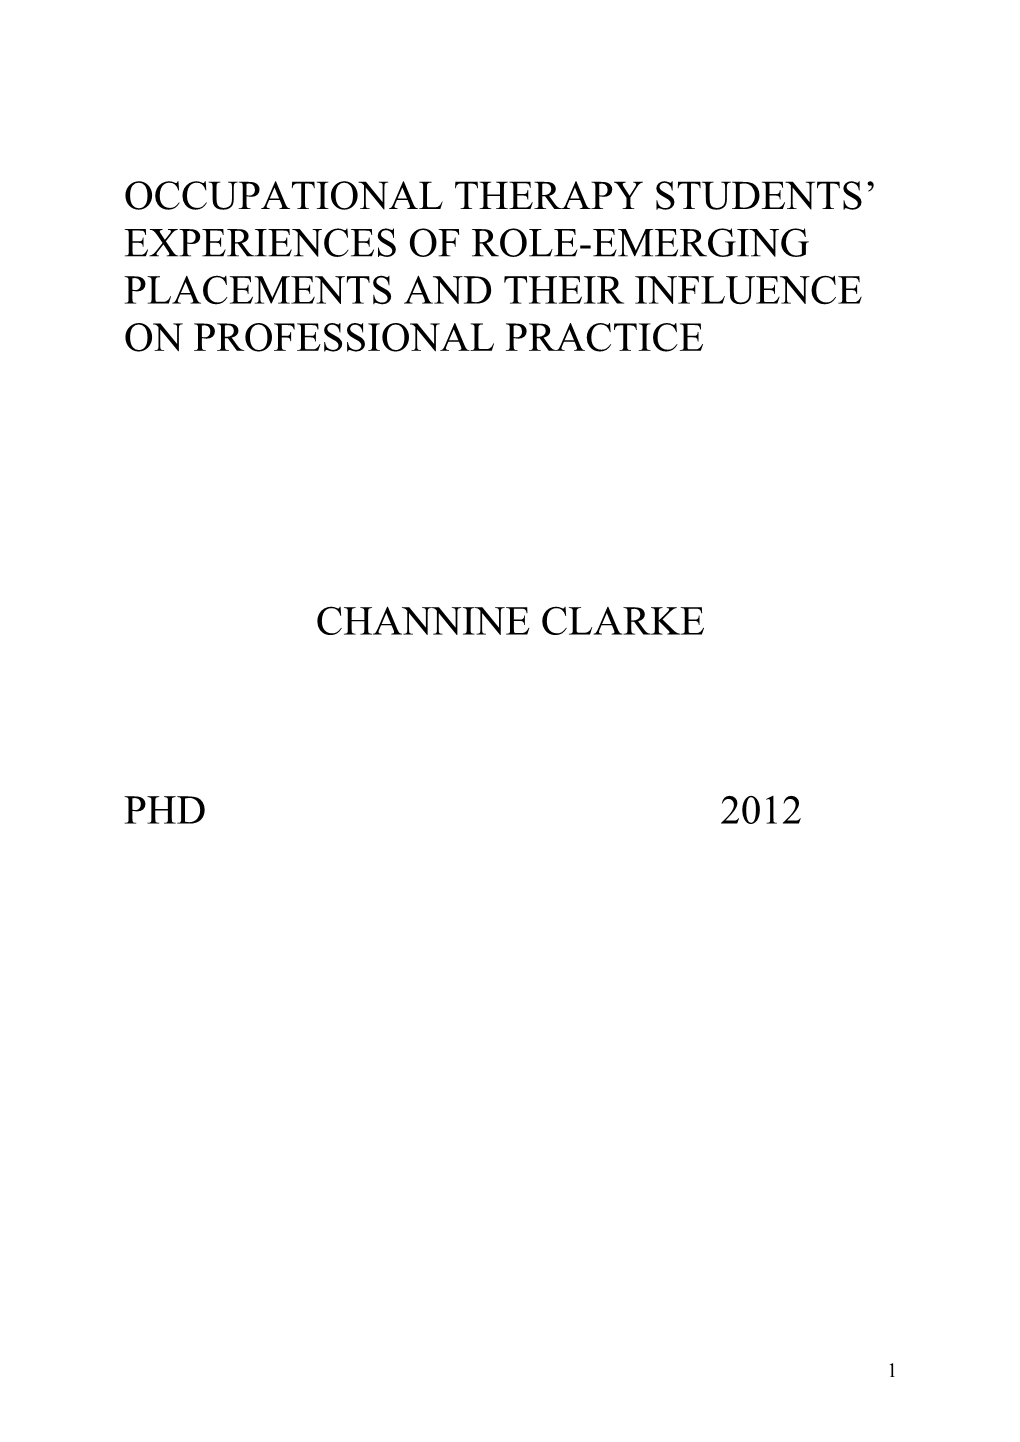 Dr Channine Clarke Final Thesis